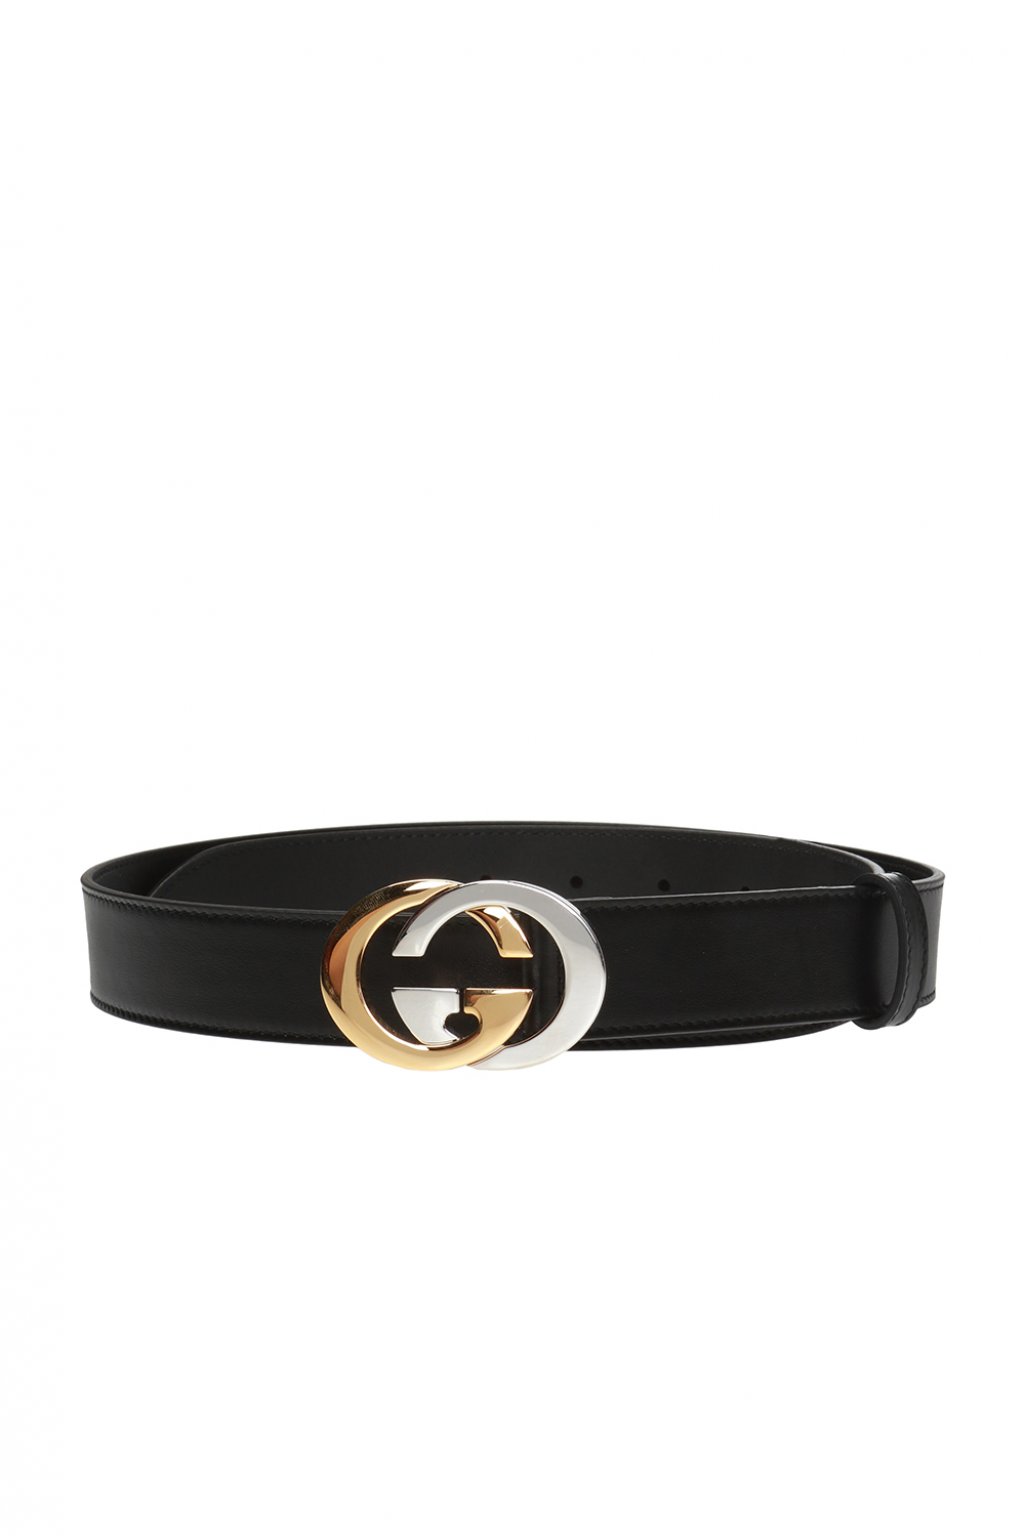 Gucci Decorative buckle belt